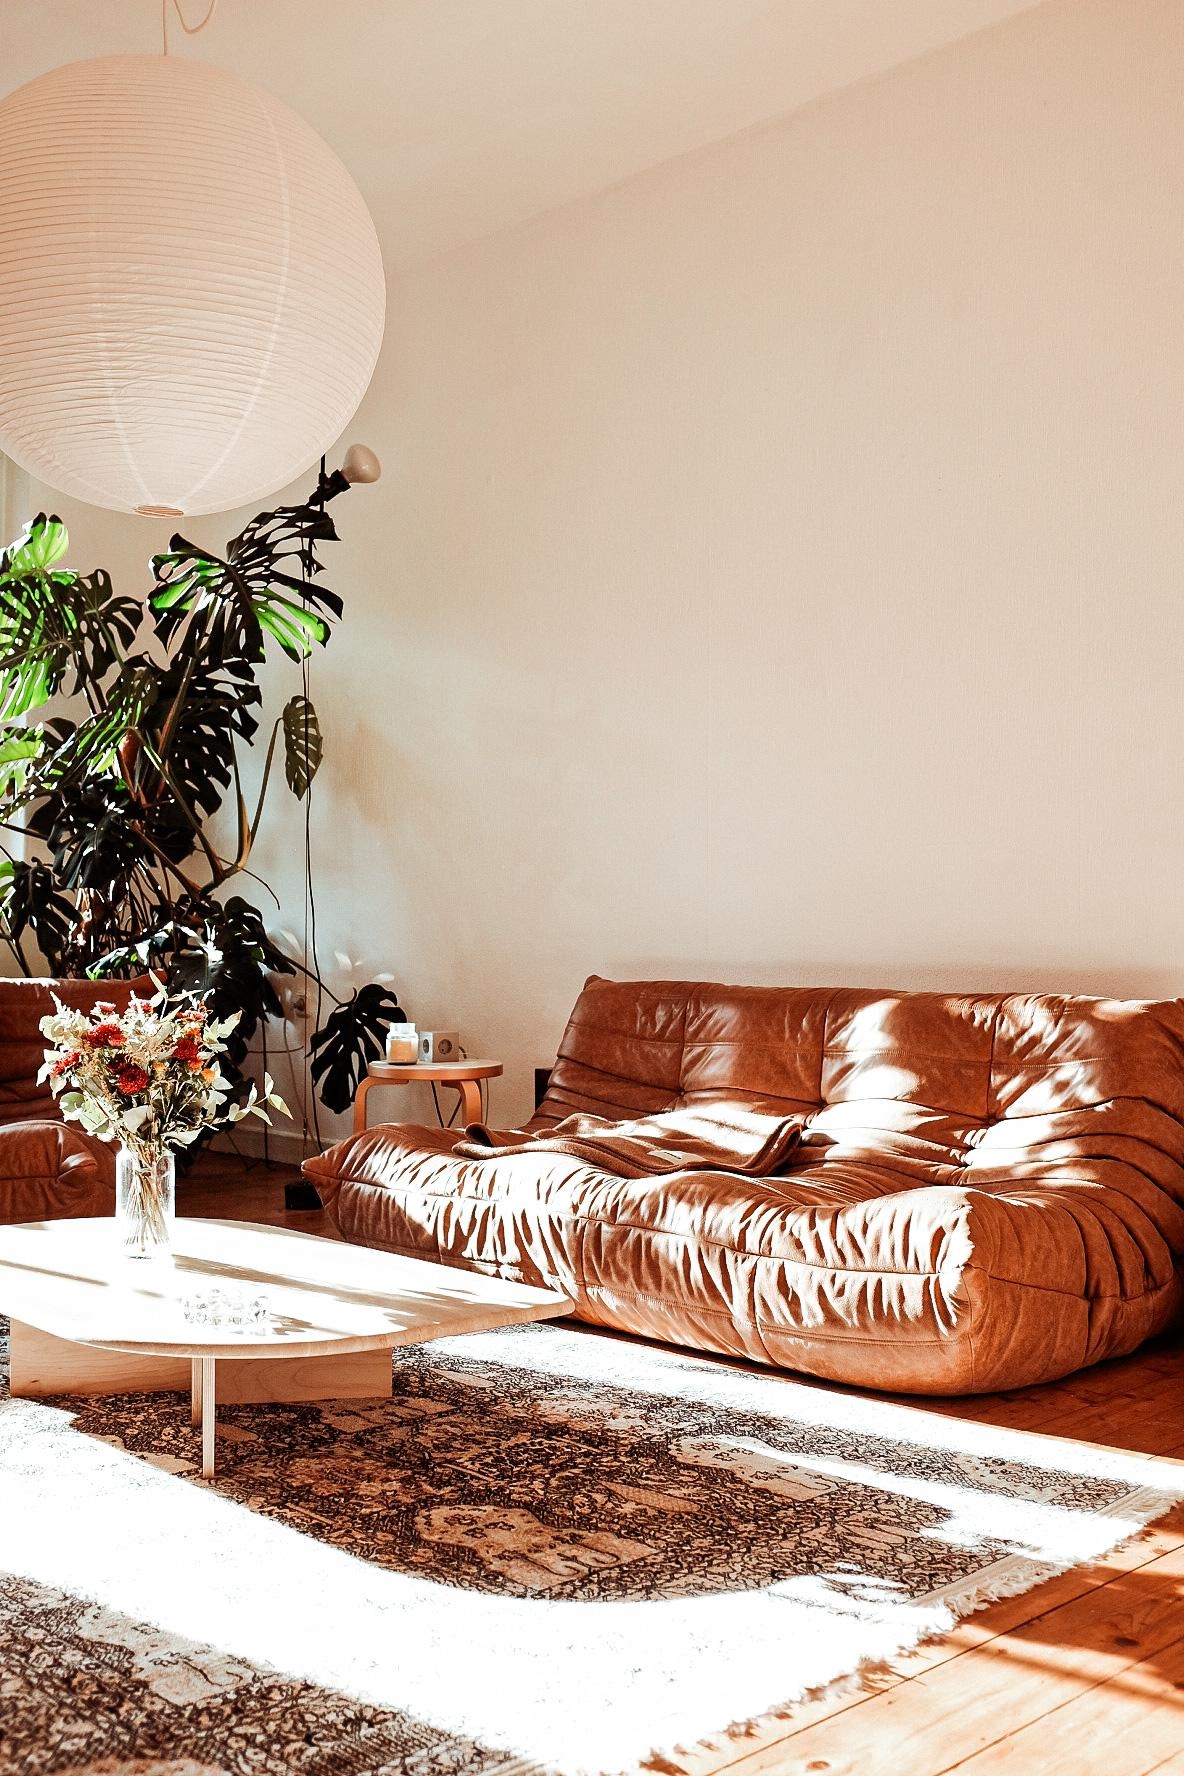 liebstes Sofa 💛
#wohnzimmer #livingroom #sofa #sunlight